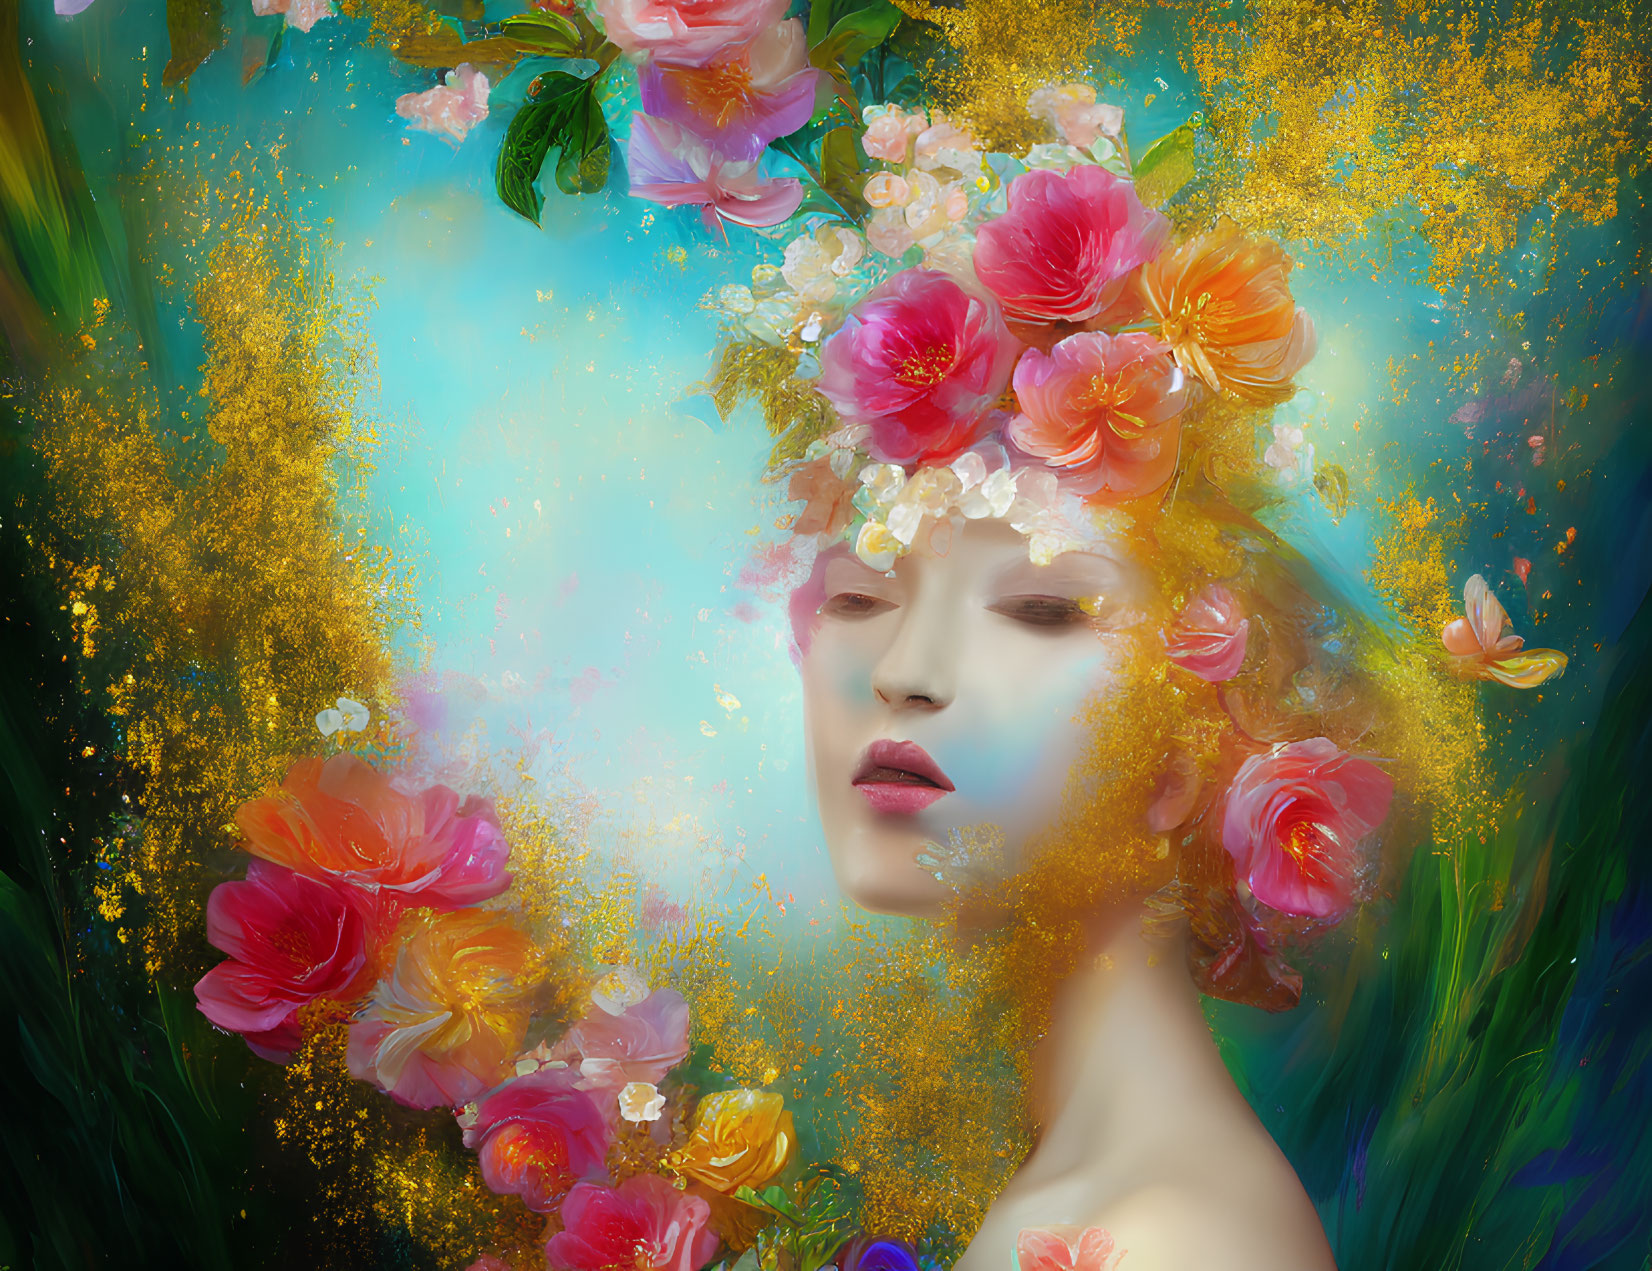 Vibrant flower-adorned woman in surreal golden mist on emerald backdrop